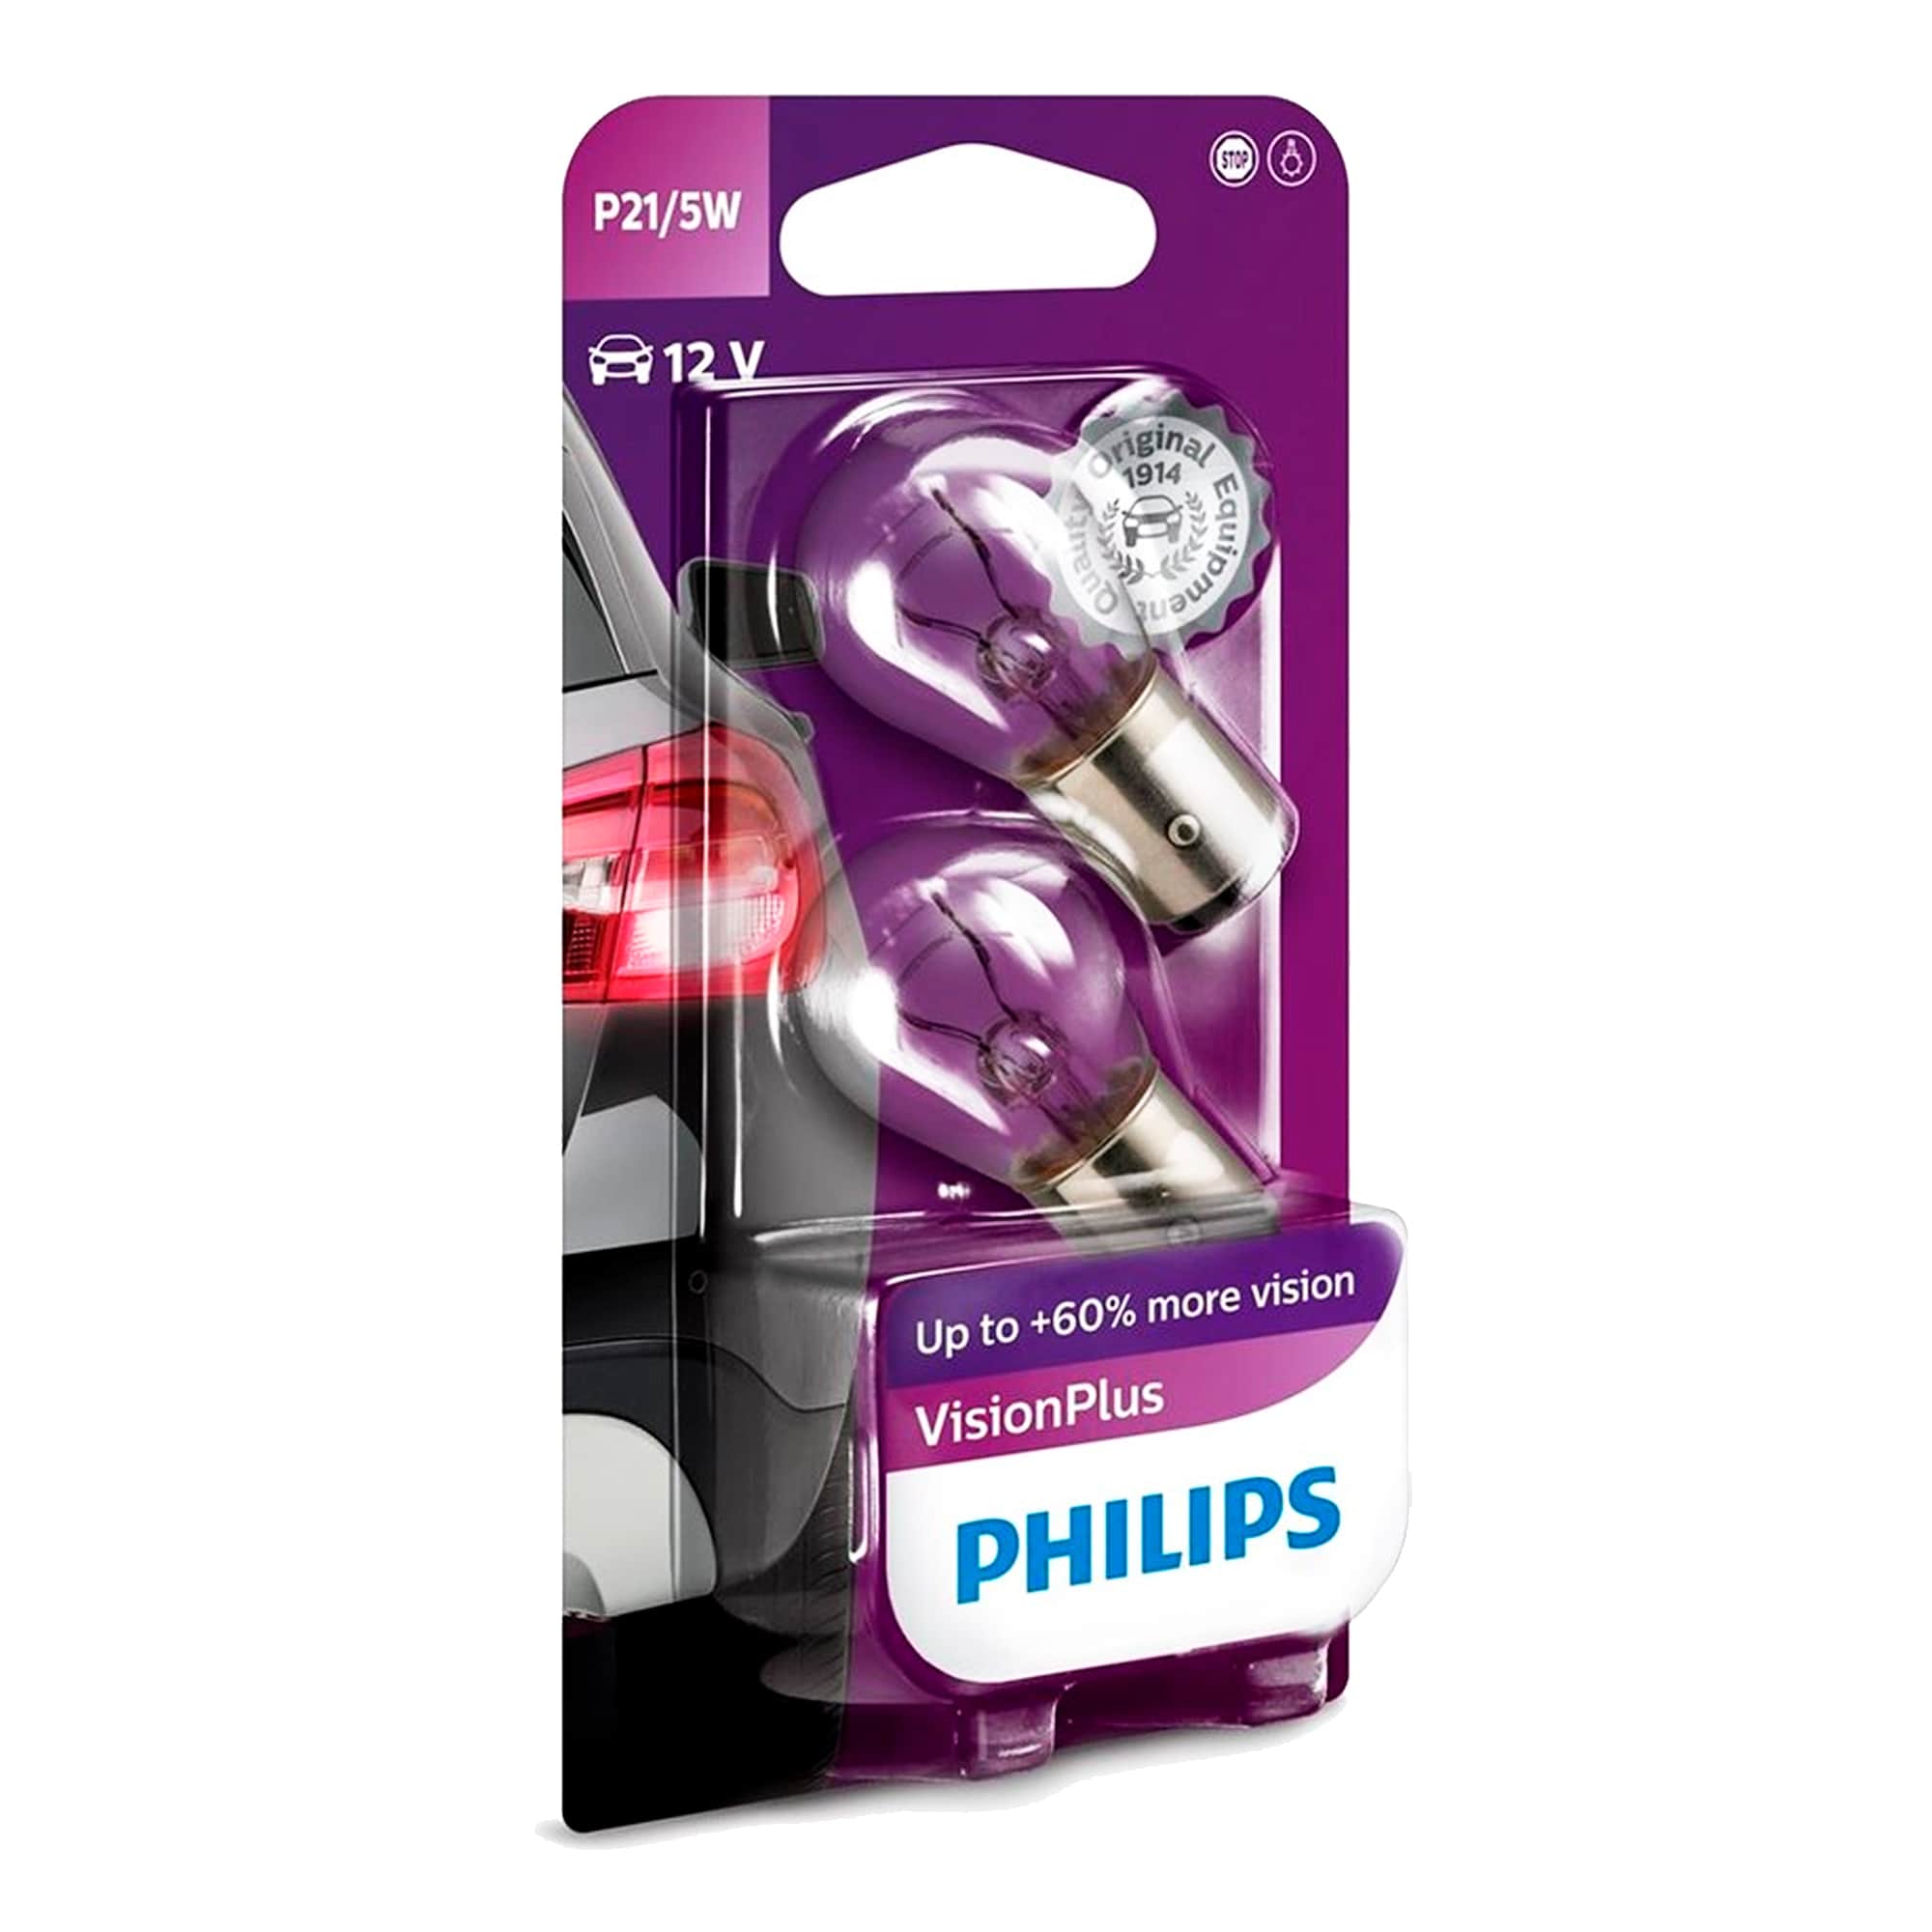 Лампа Philips VisionPlus P21/5W 12V 5/21W 12499VPB2